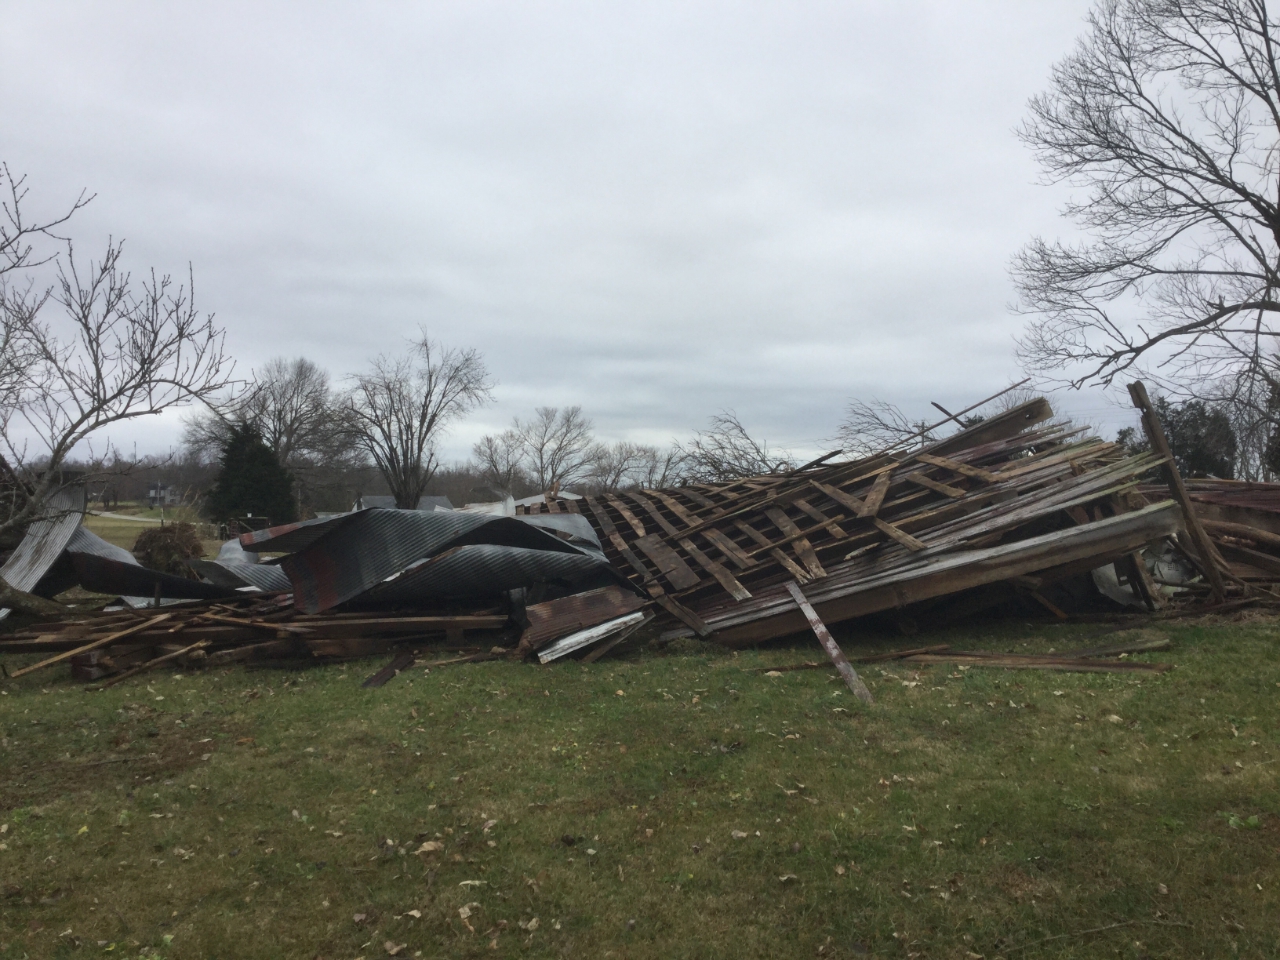 EF1 tornado damage near Dogwood, Indiana December 31, 2018